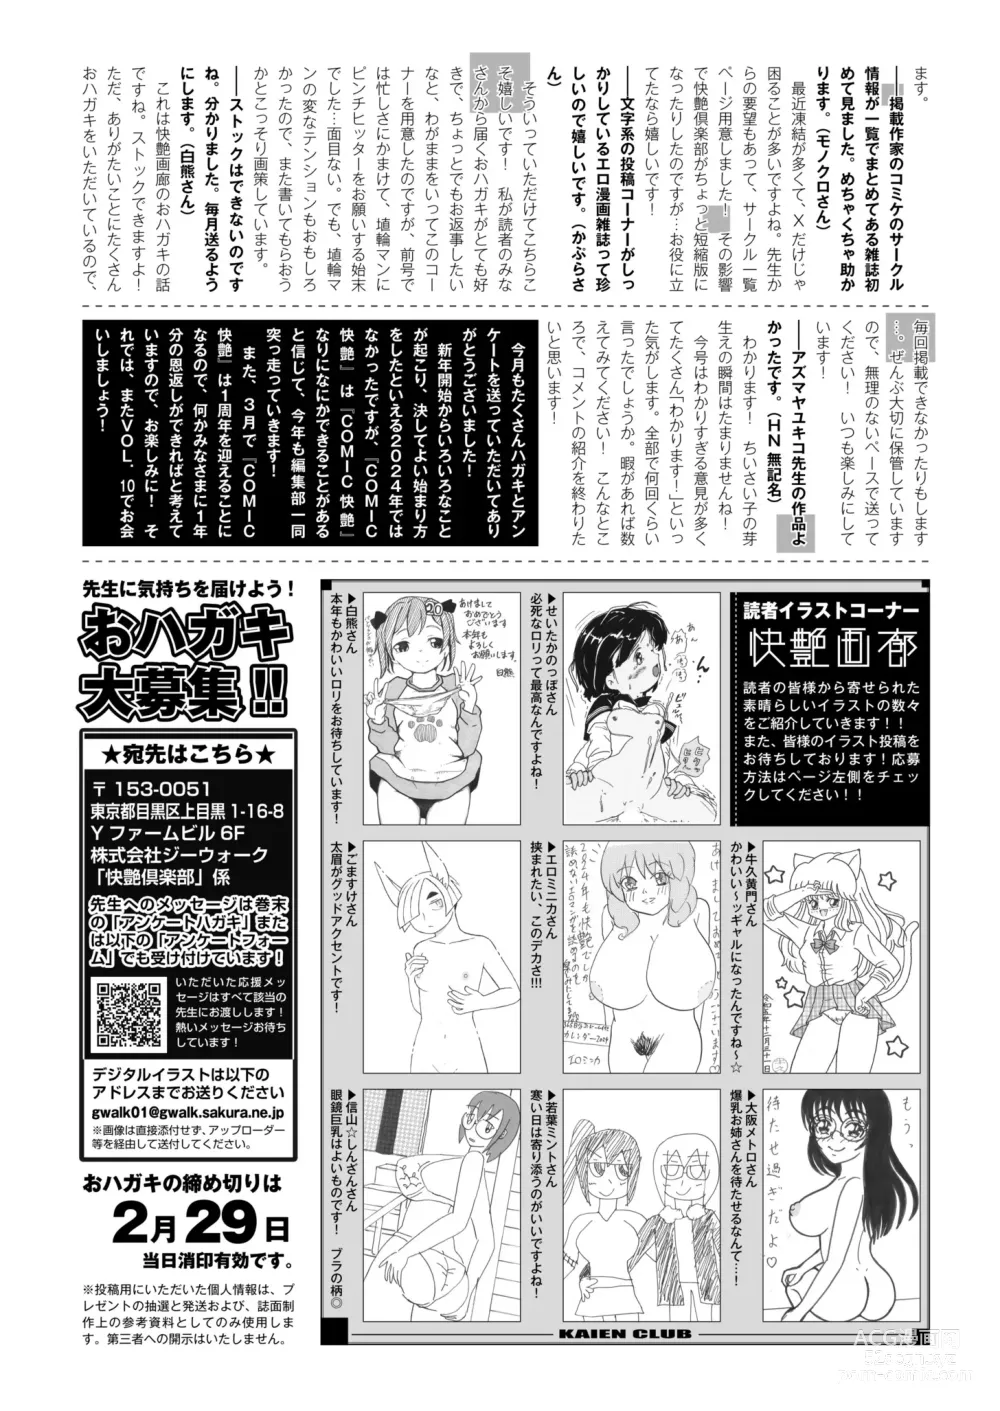 Page 446 of manga COMIC Kaien VOL.09